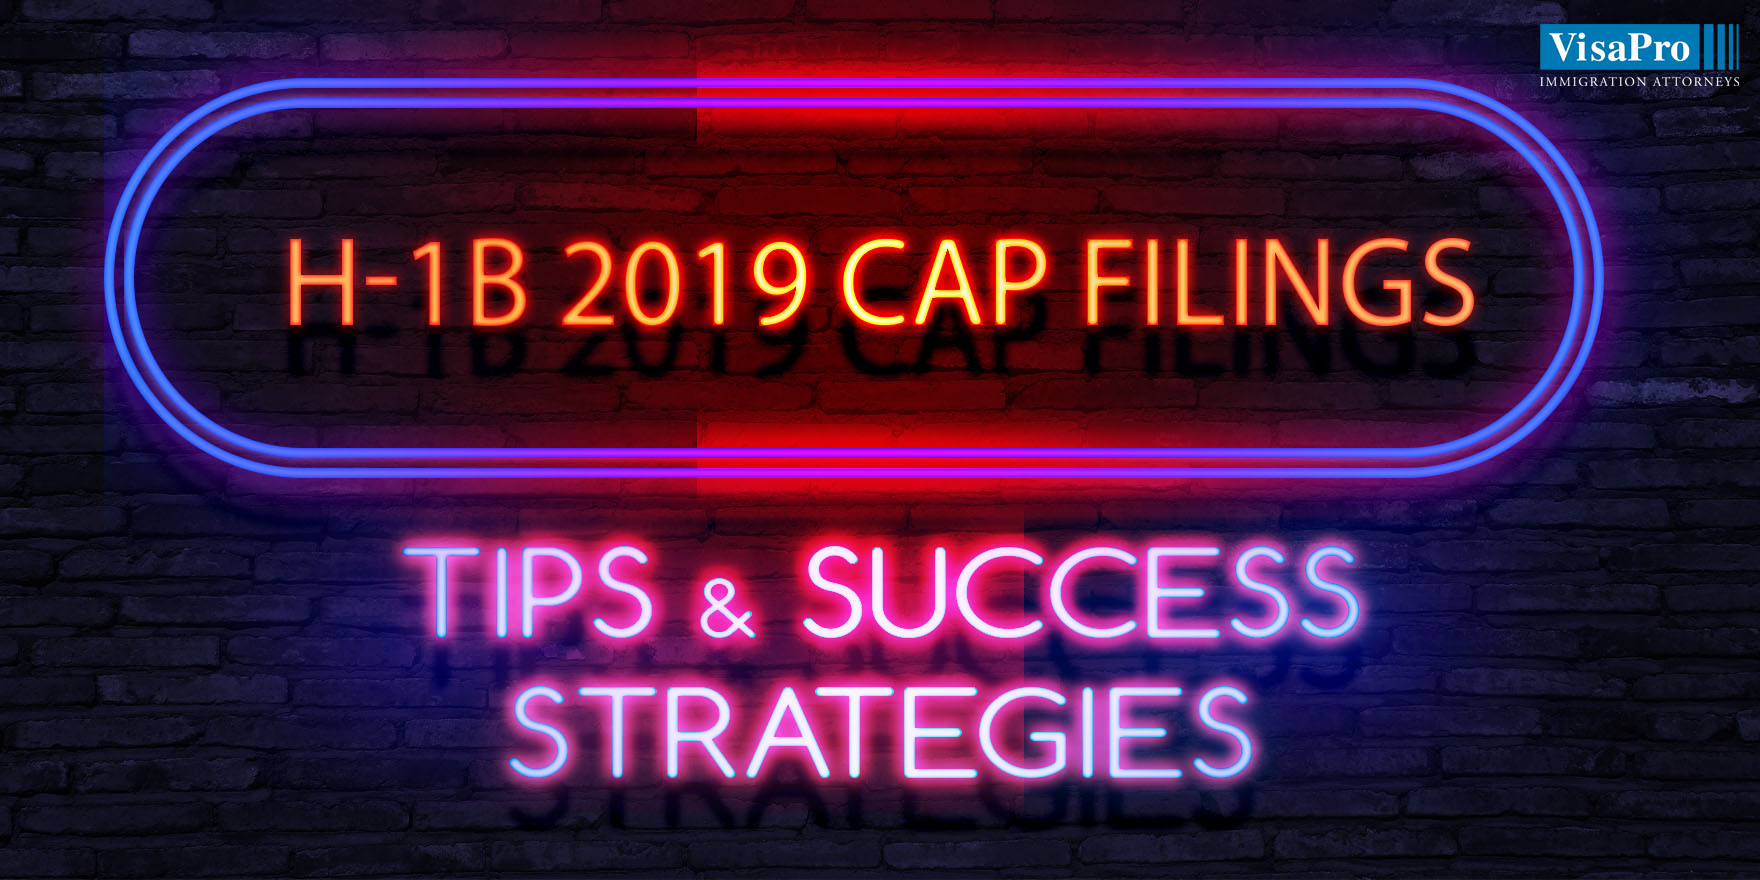 Tips & Strategies To Beat The H-1B Cap 2019 Filing Timeline, Atlanta, Georgia, United States